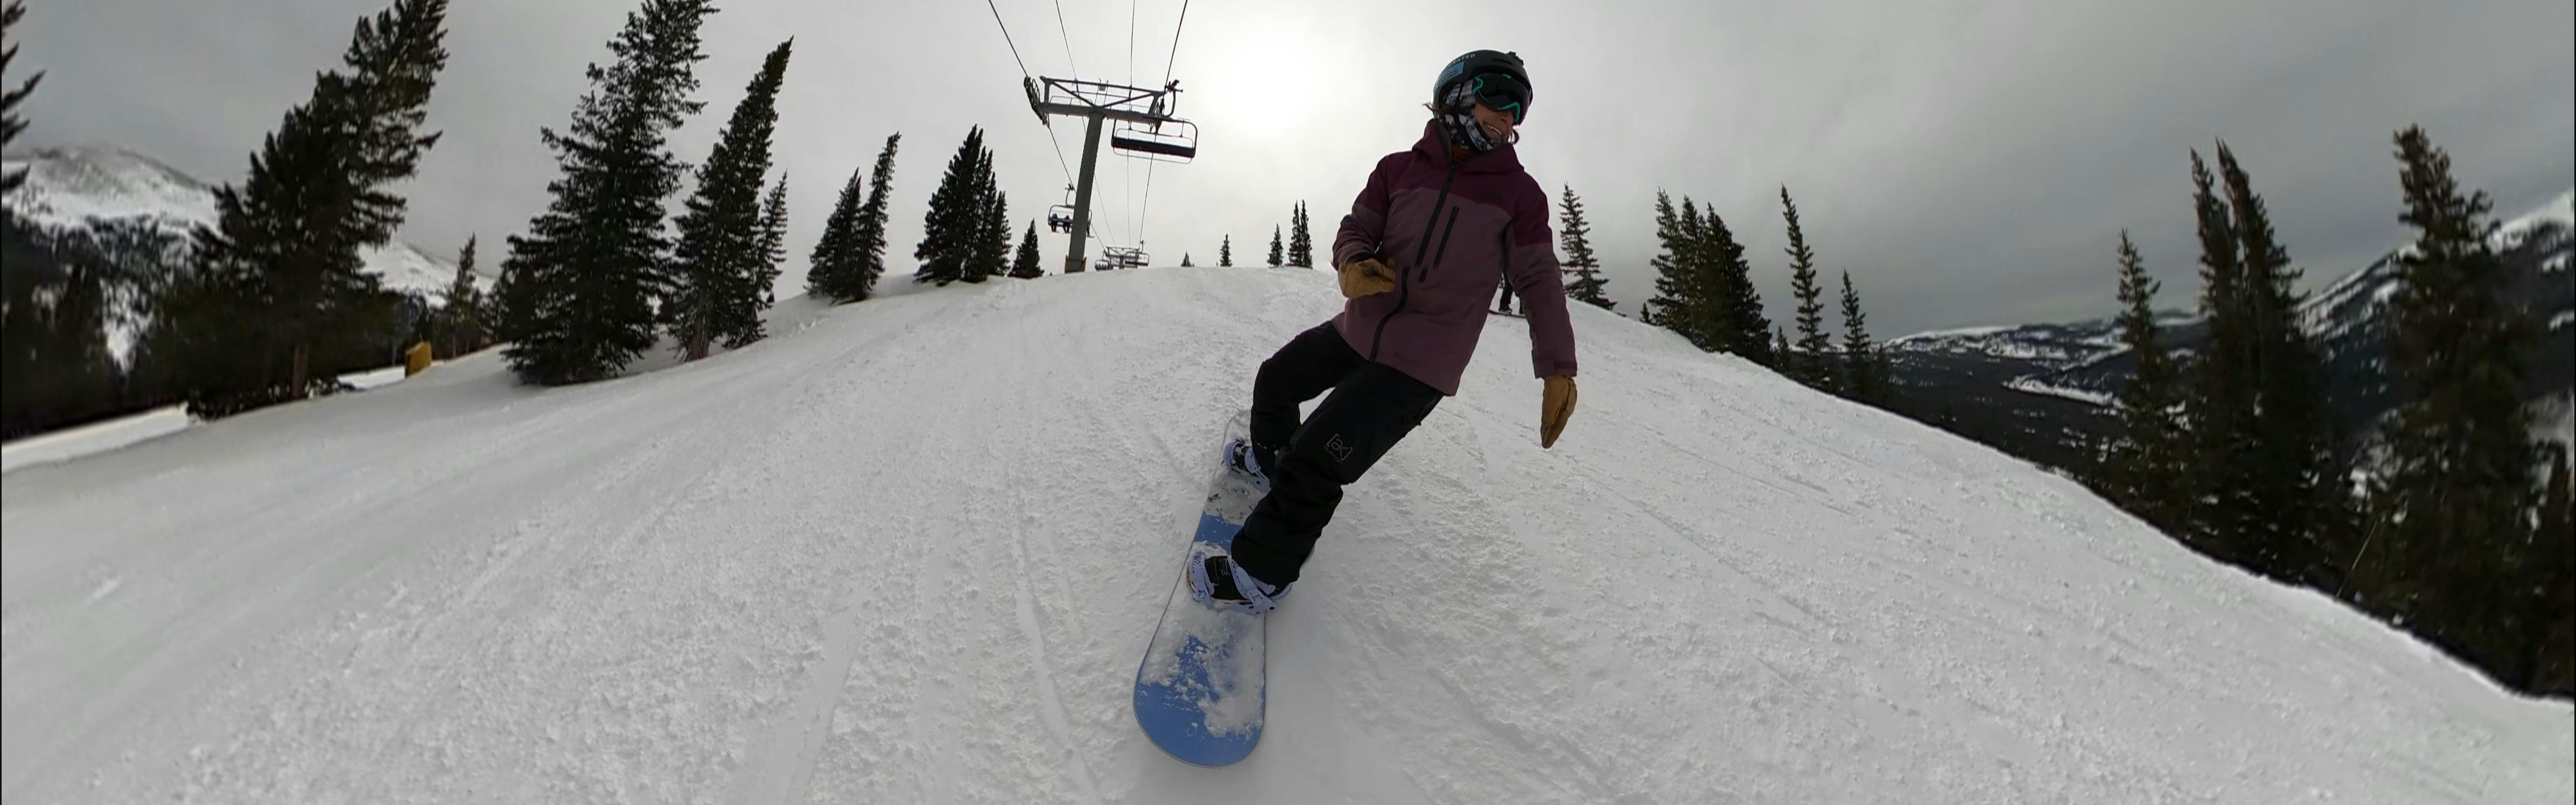 A snowboarder on the Roxy Dawn Snowboard. 